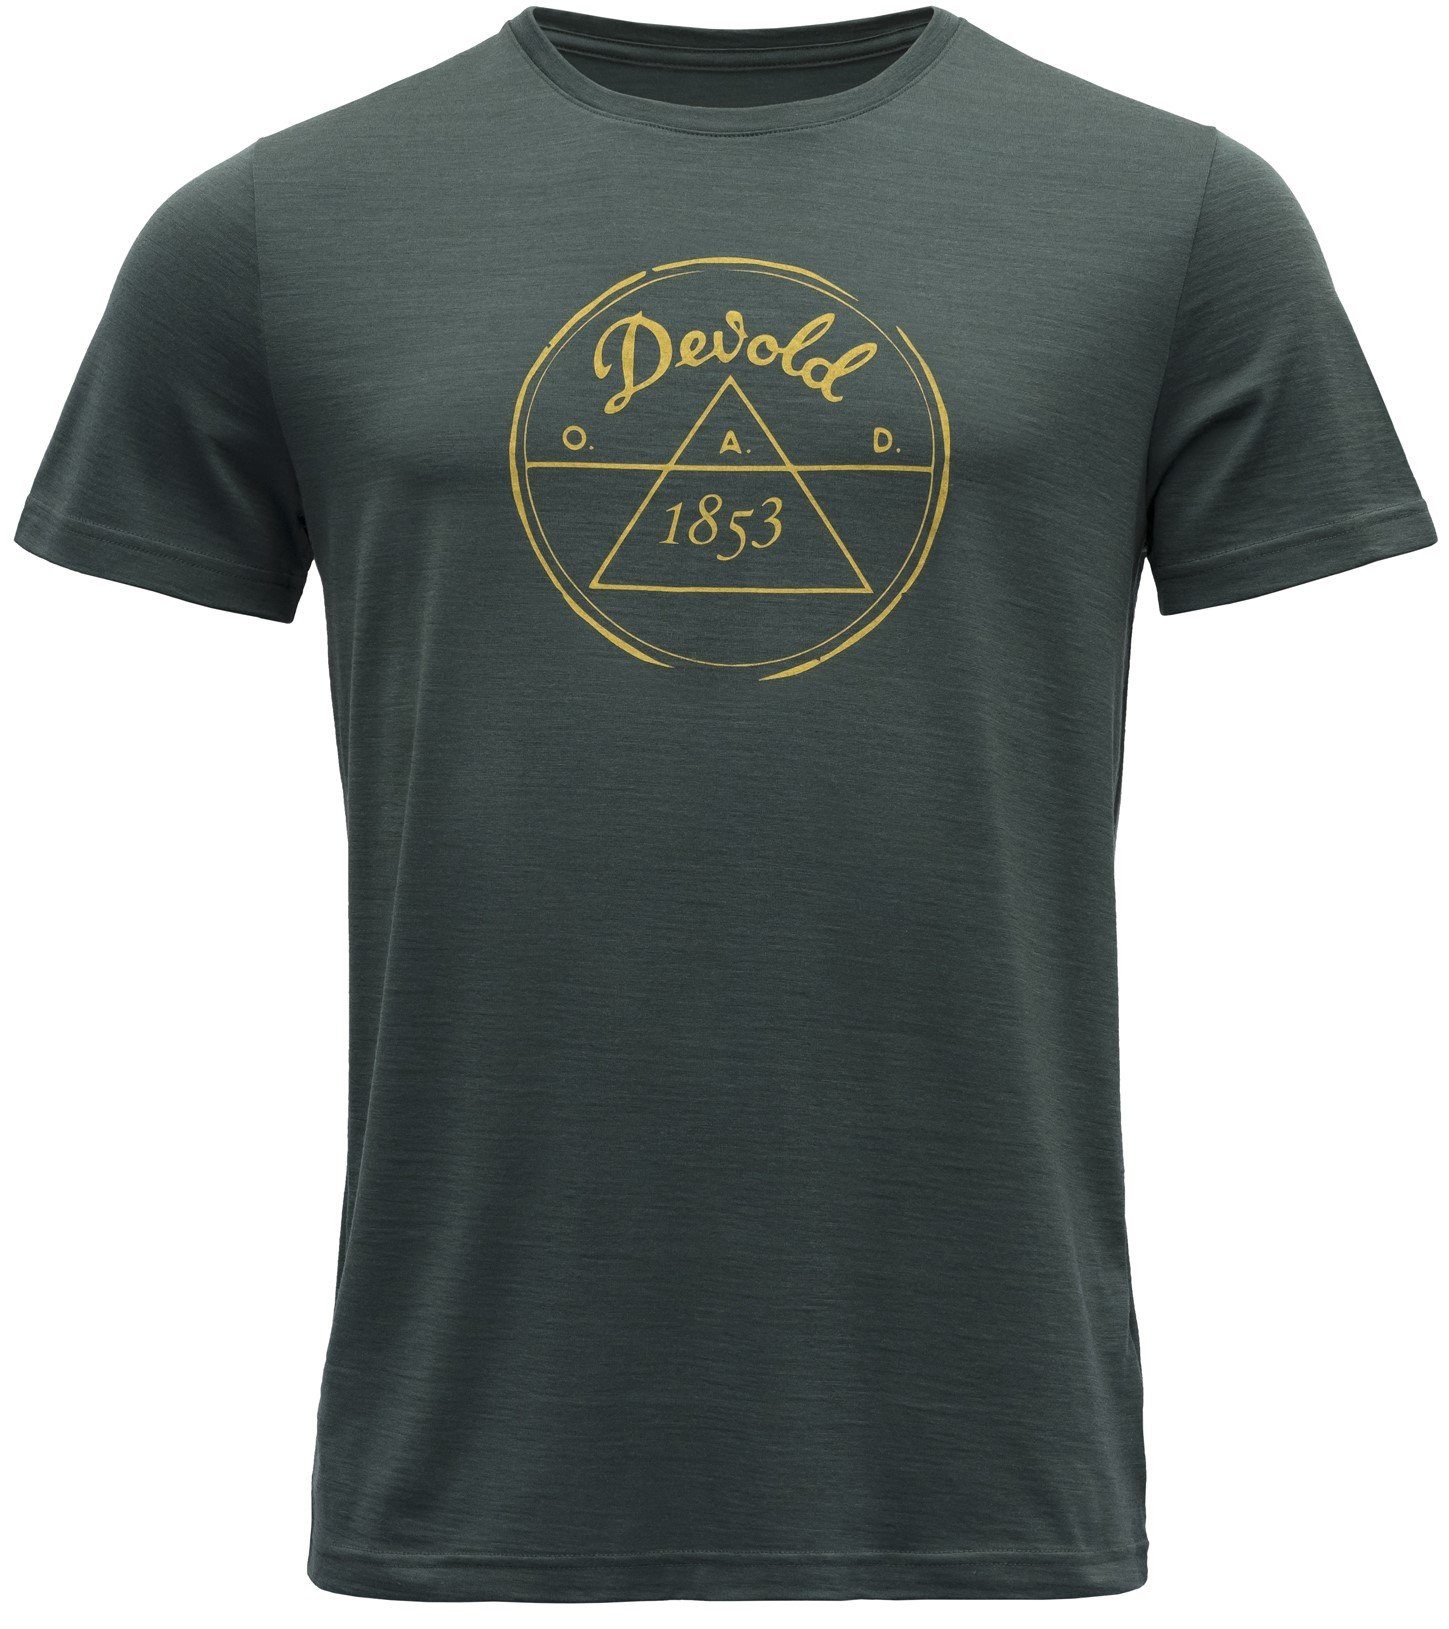 Devold T-Shirt Devold 1853 Man Tee woods